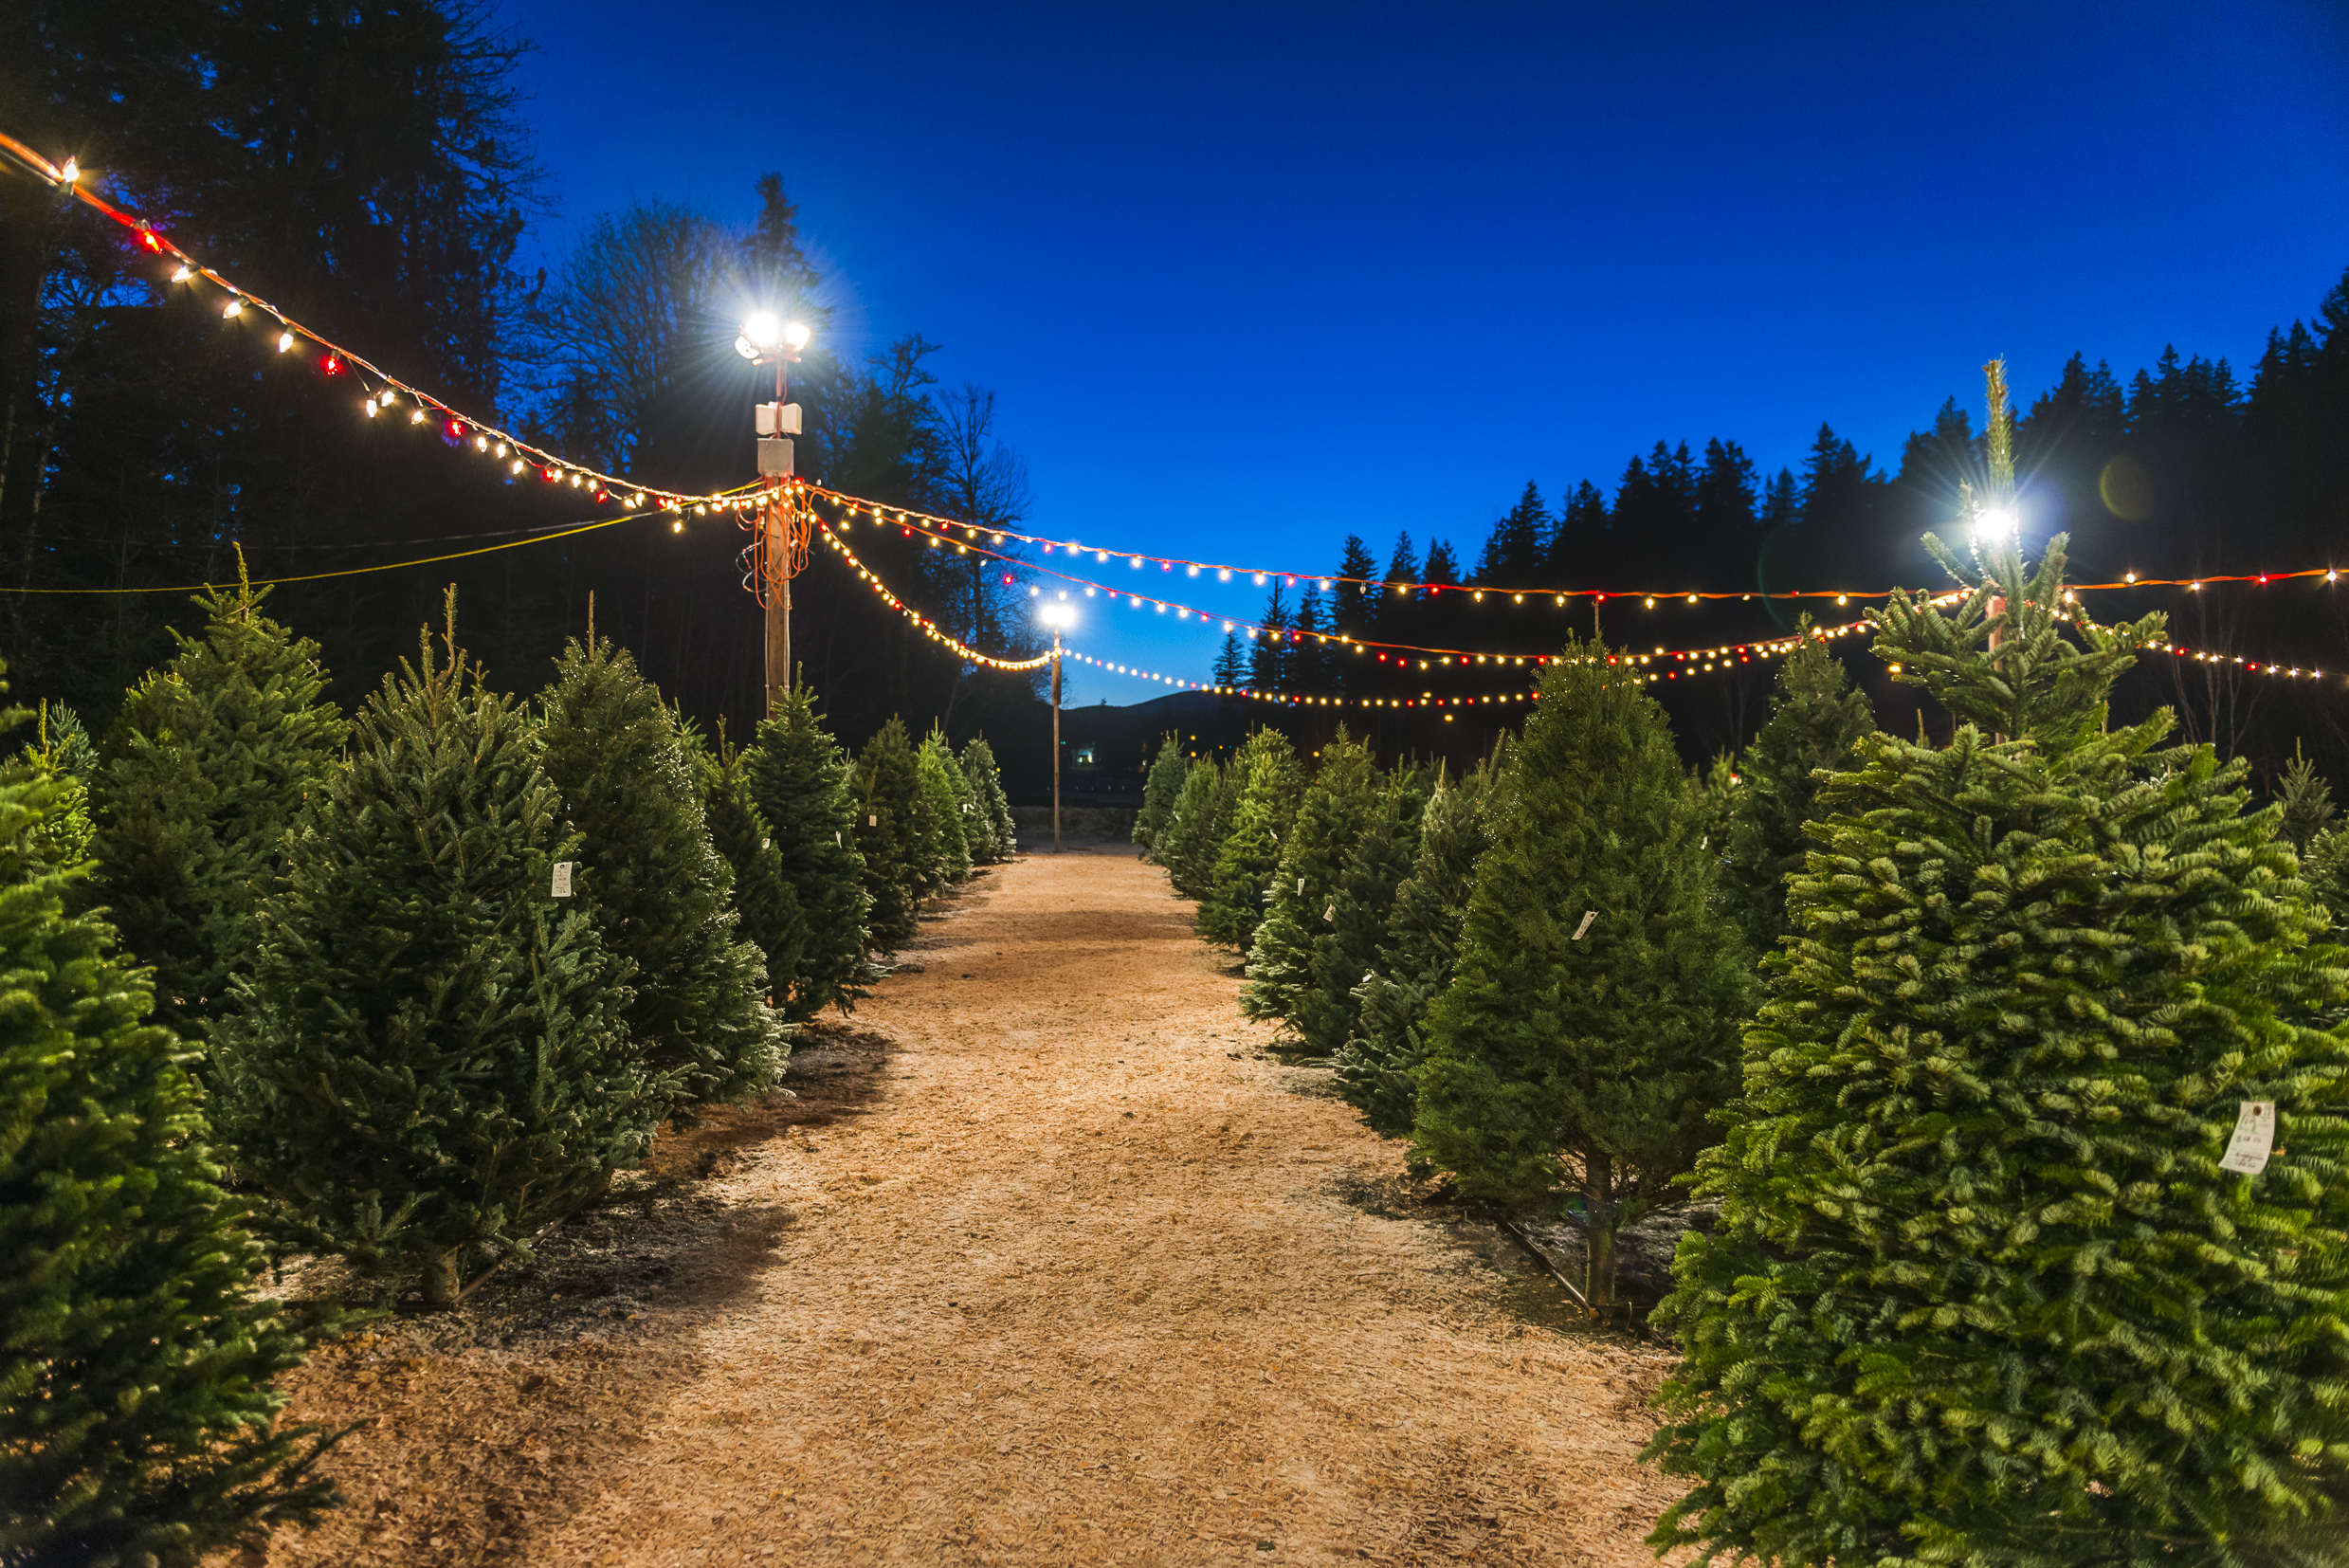 Christmas Trees in Short Supply this Season